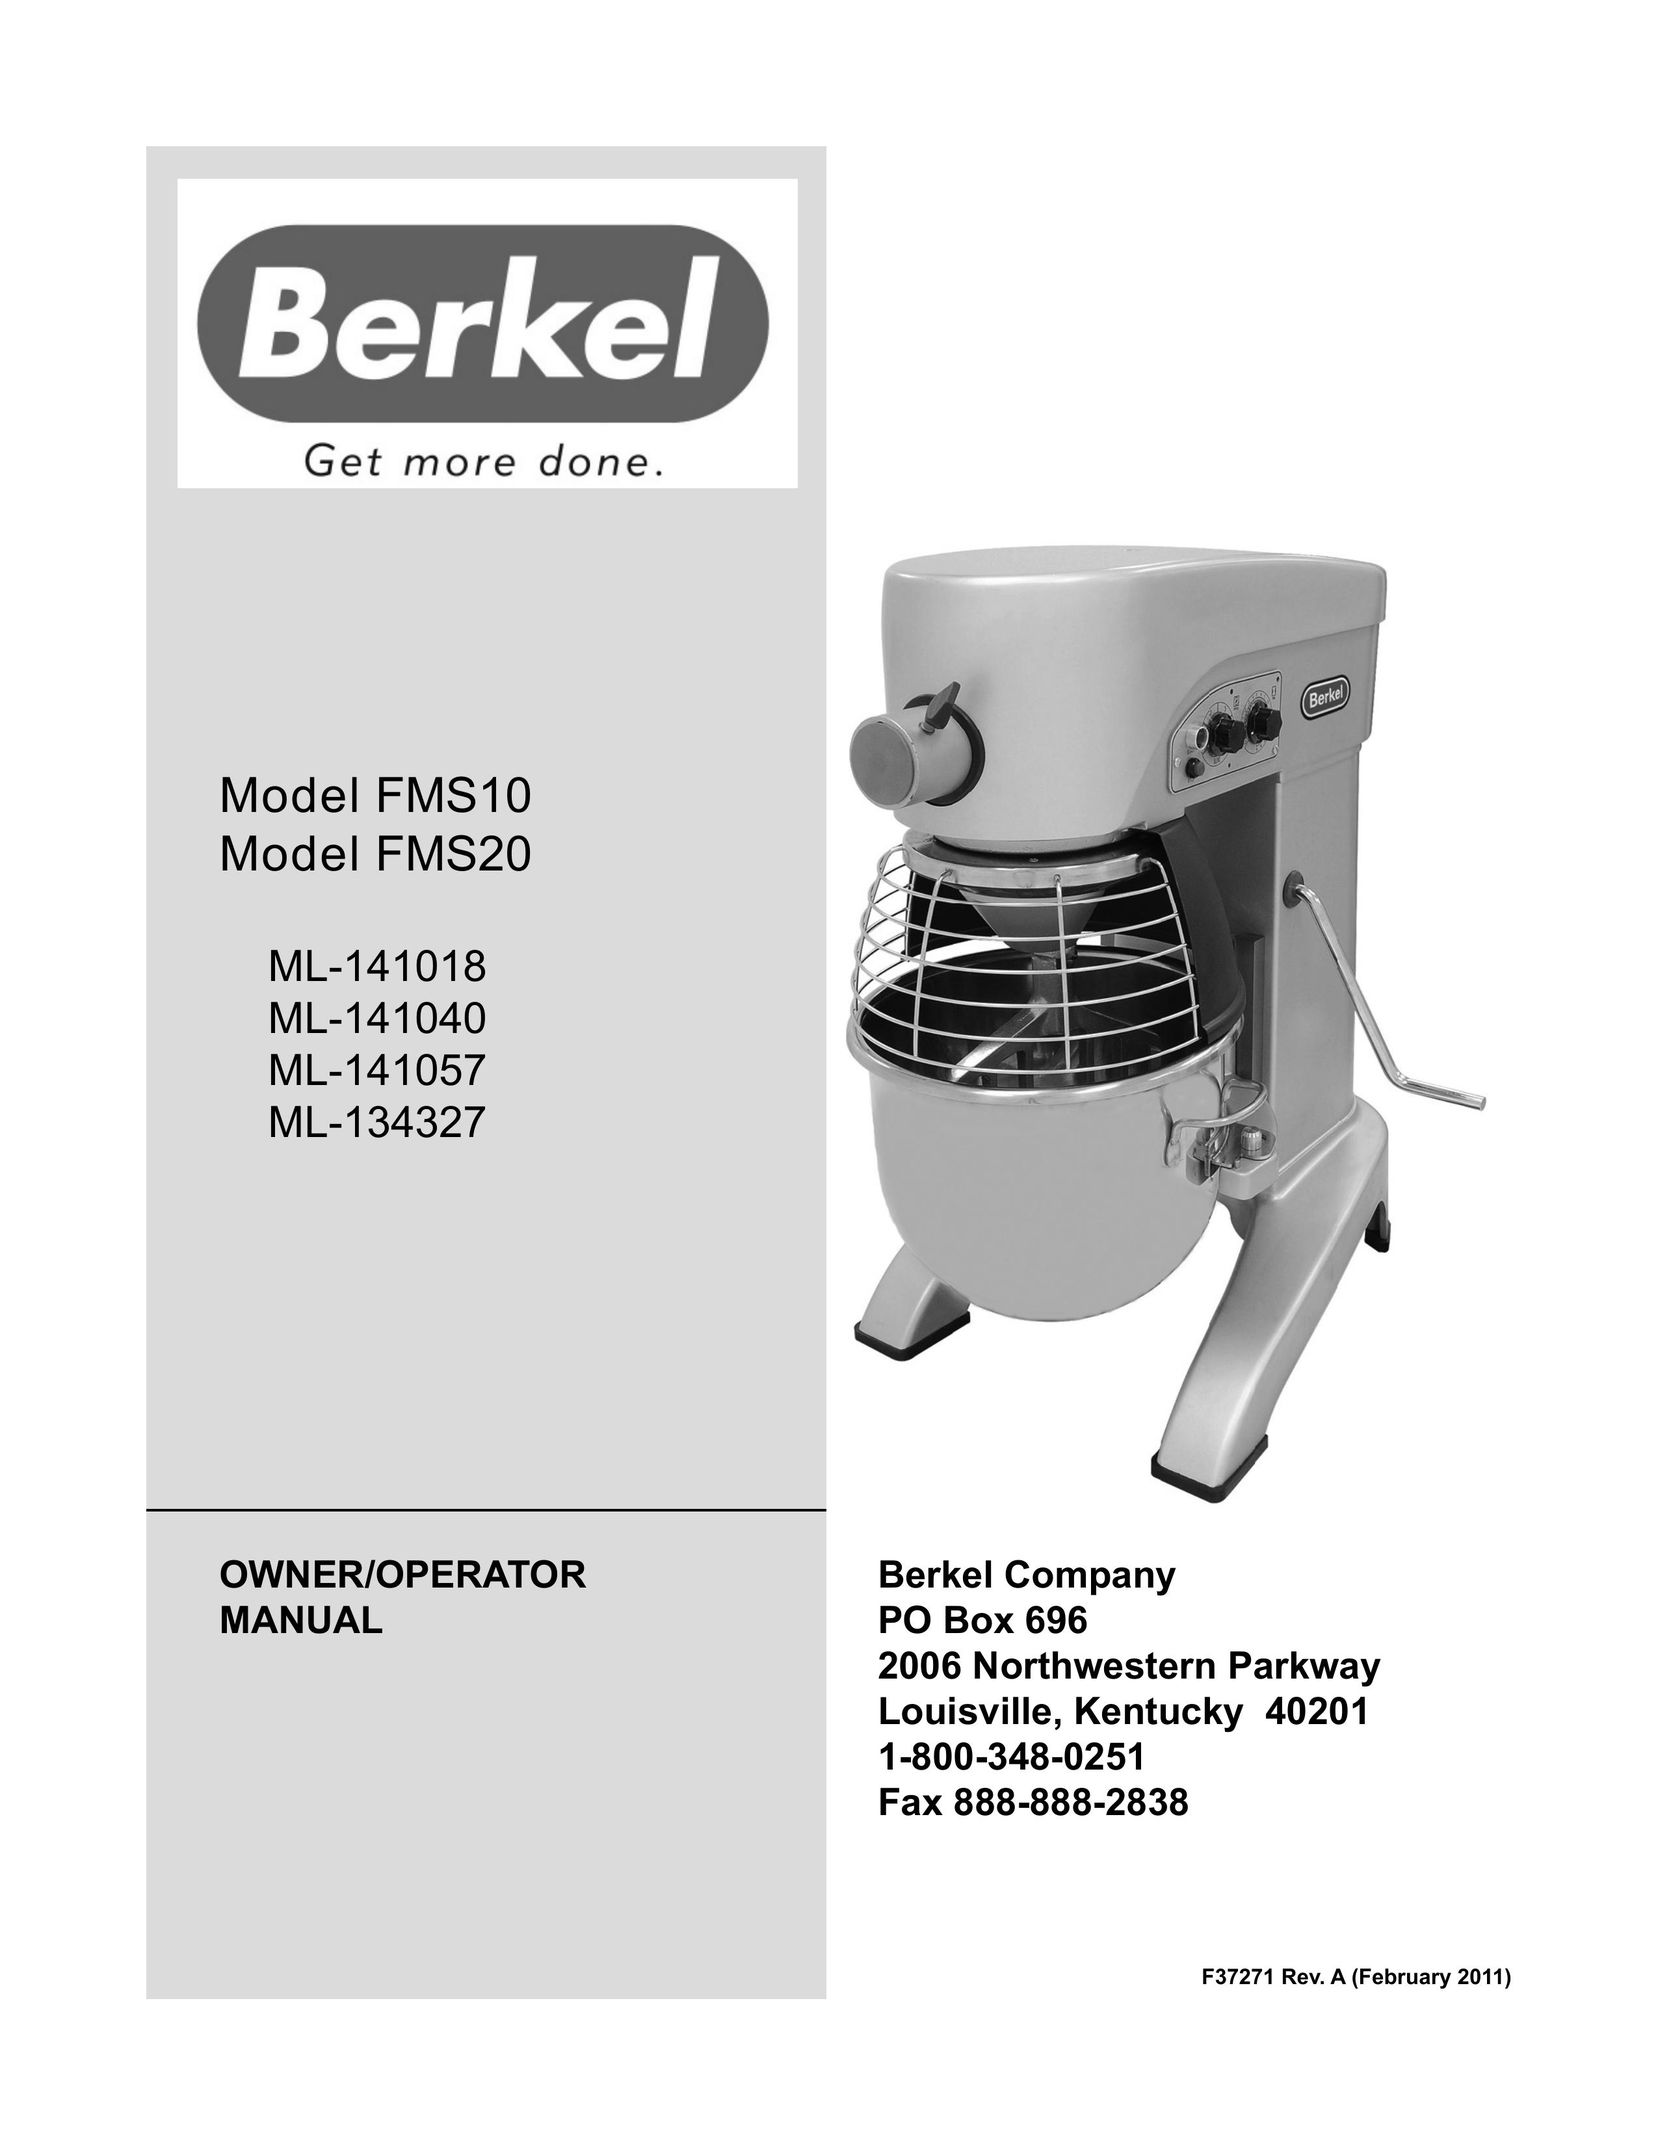 Berkel ML-134327 Mixer User Manual